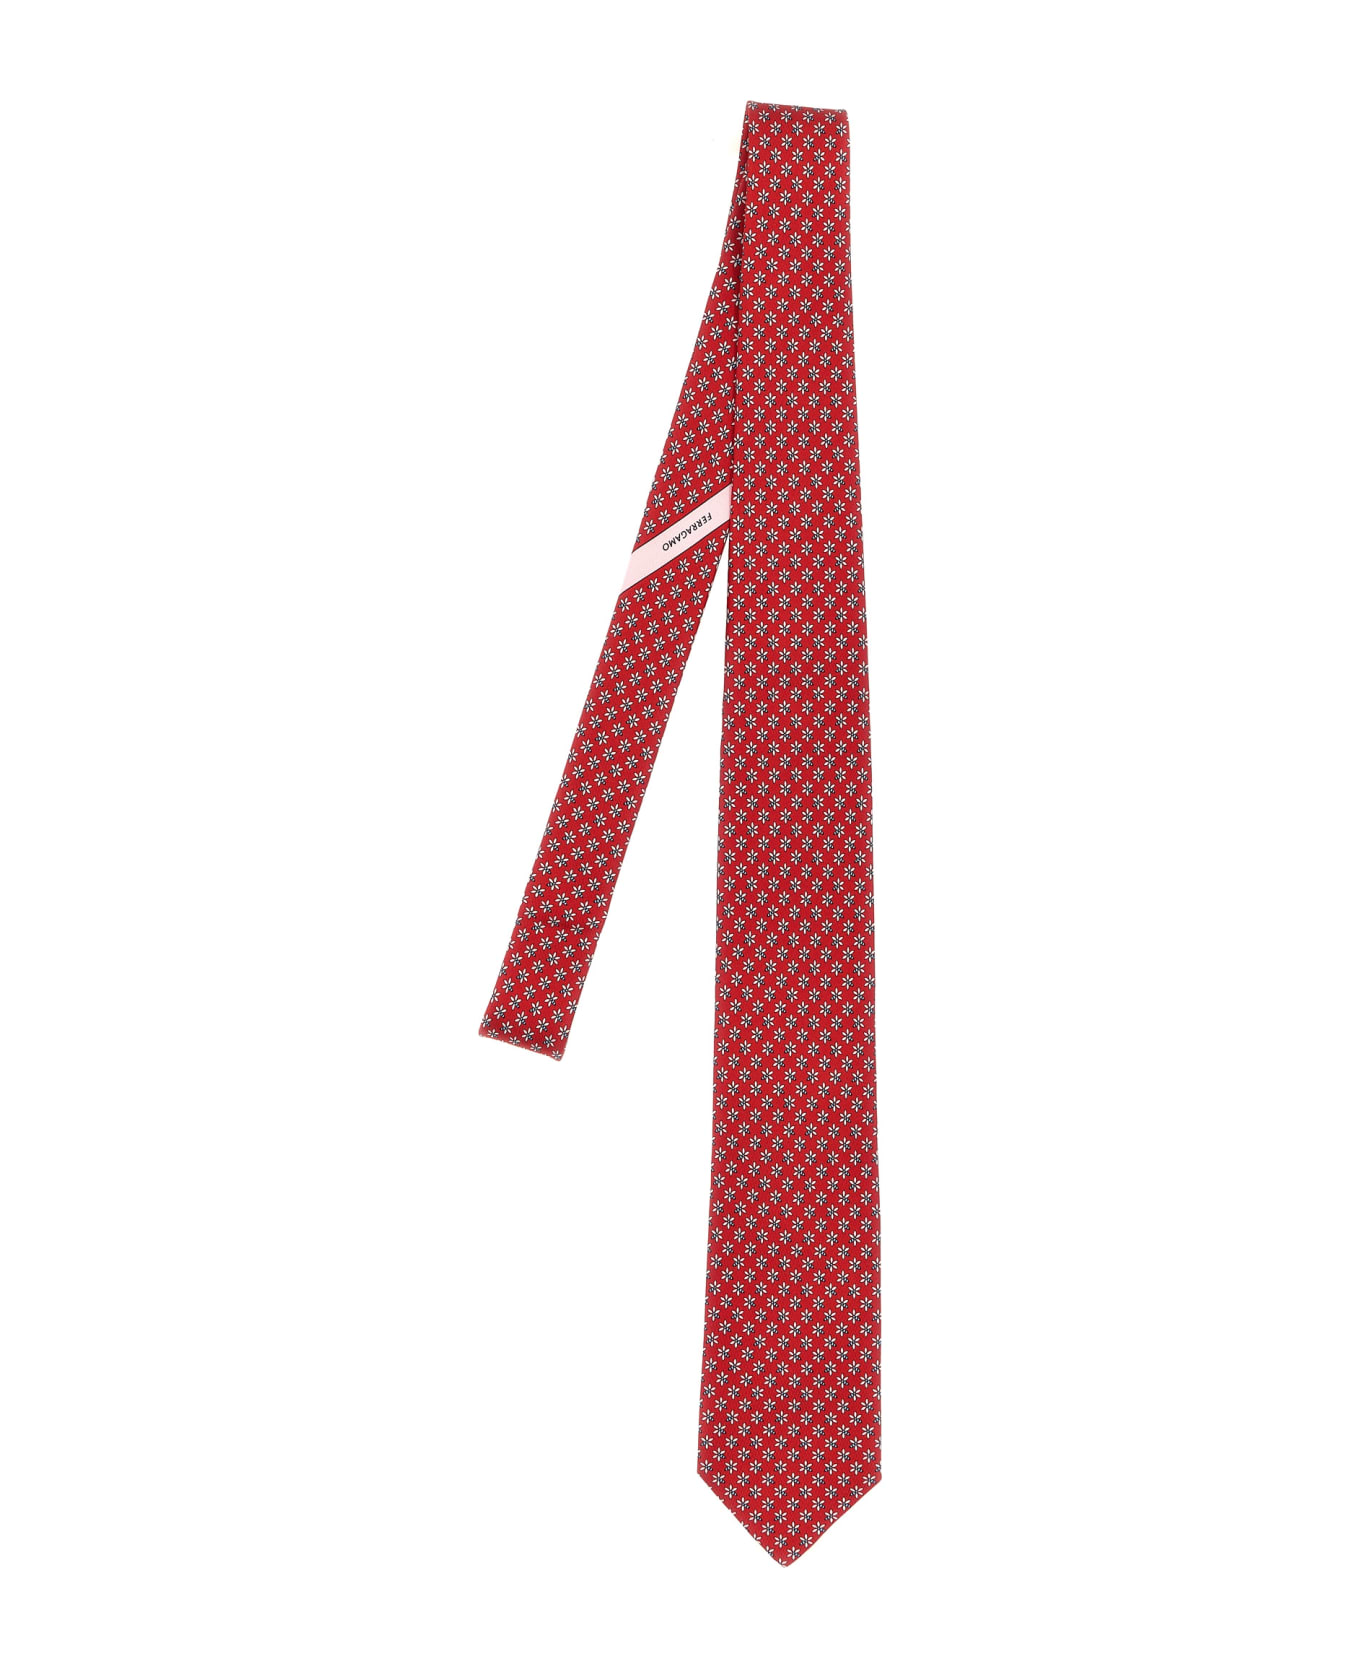 Ferragamo 'api' Tie - Red ネクタイ